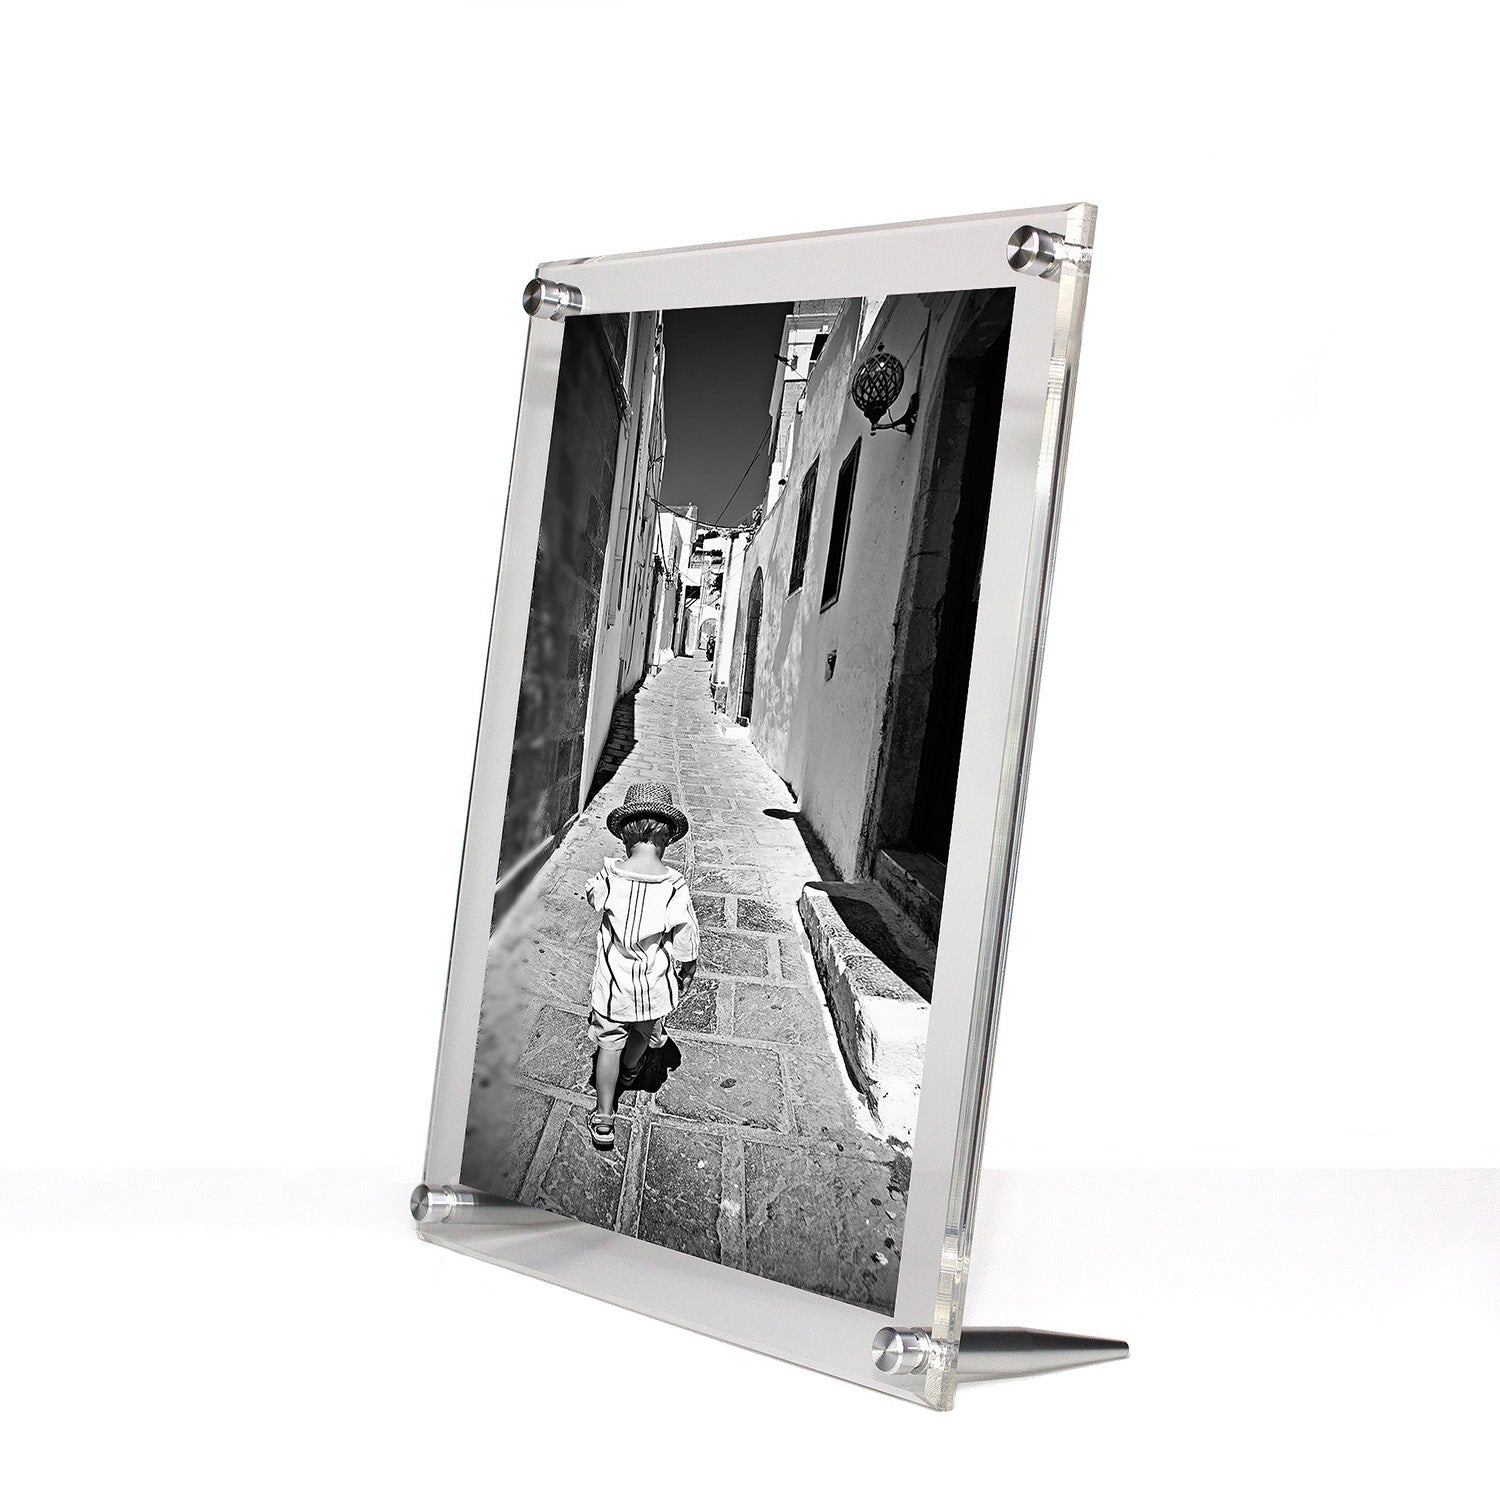 CANVAS DEPTH FLOAT FRAME 8x10 Black - Picture Frames, Photo Albums